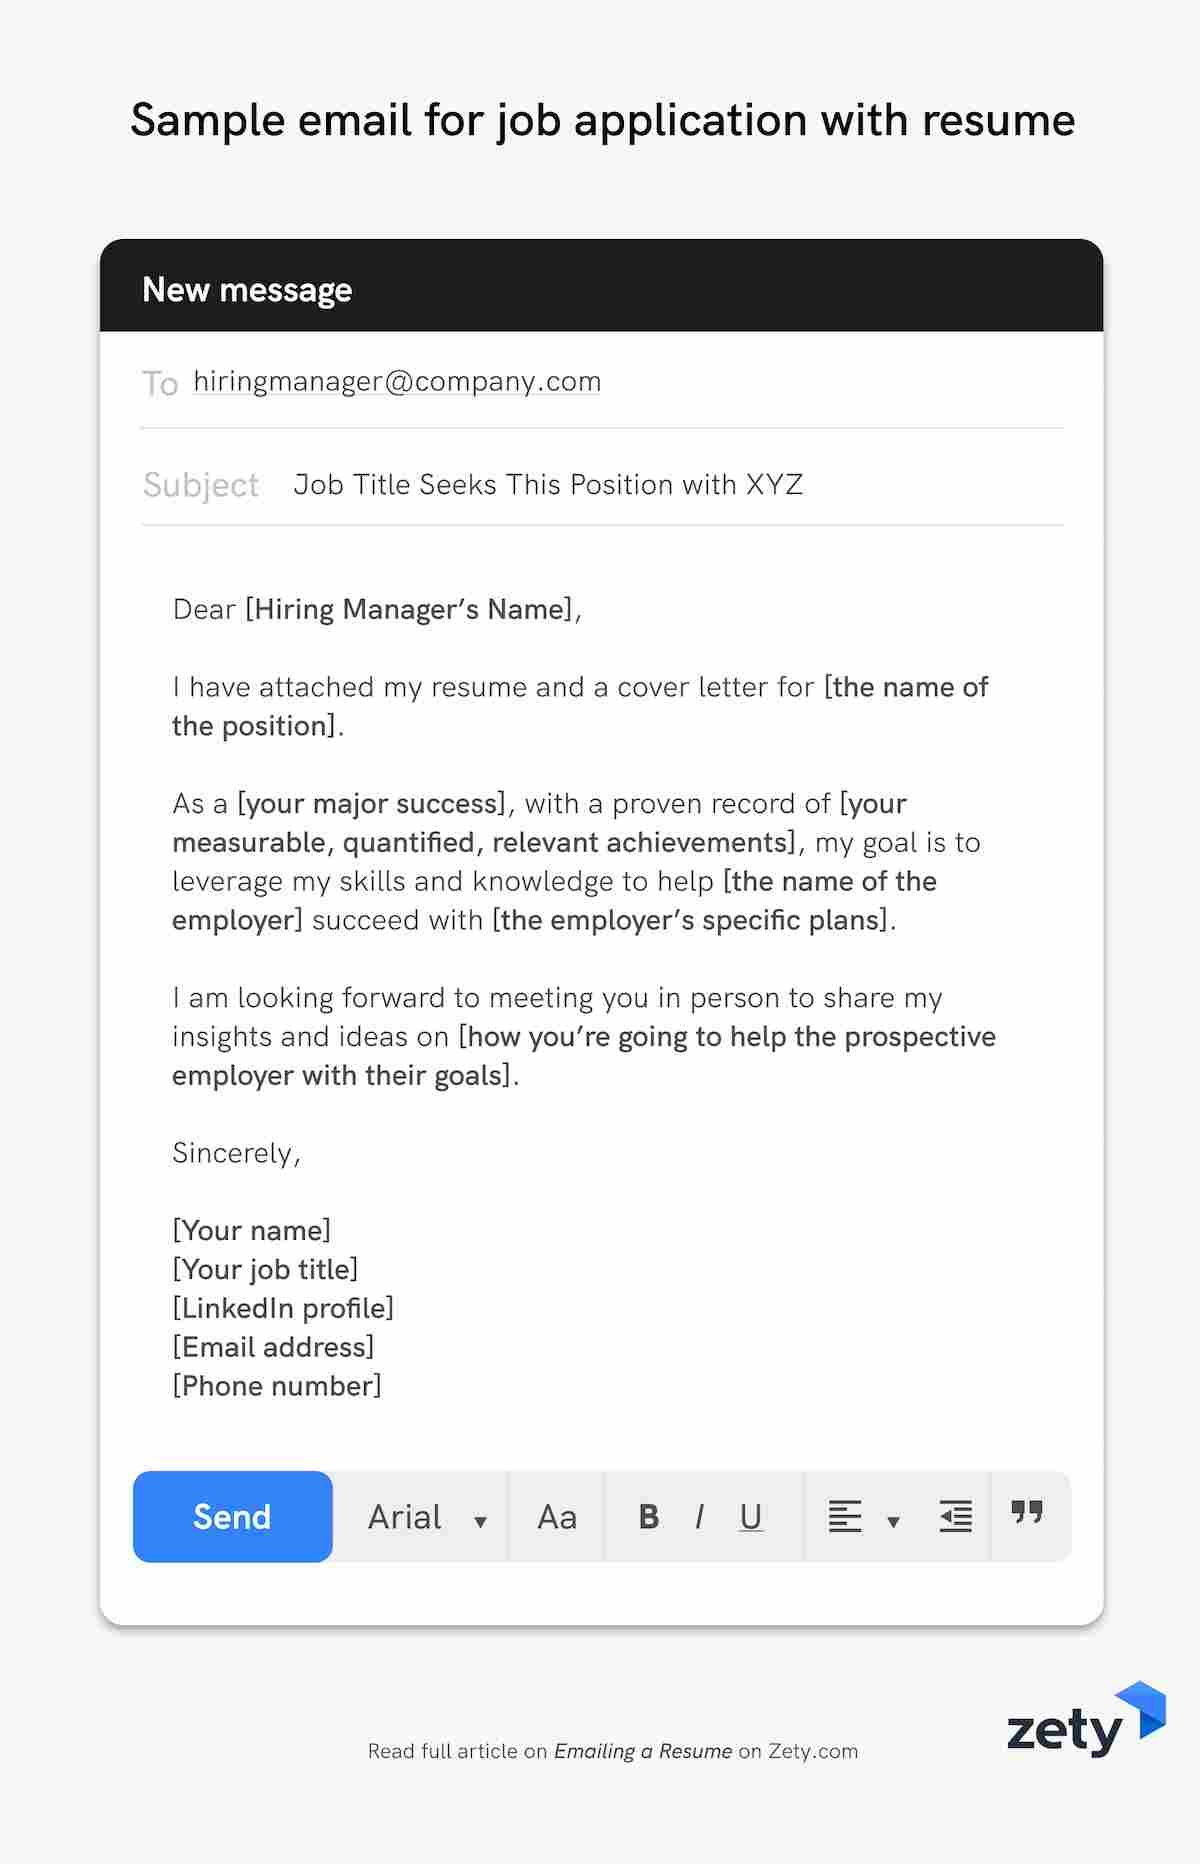 Sample Of Sending Resume by Email Emailing A Resume: 12lancarrezekiq Job Application Email Samples